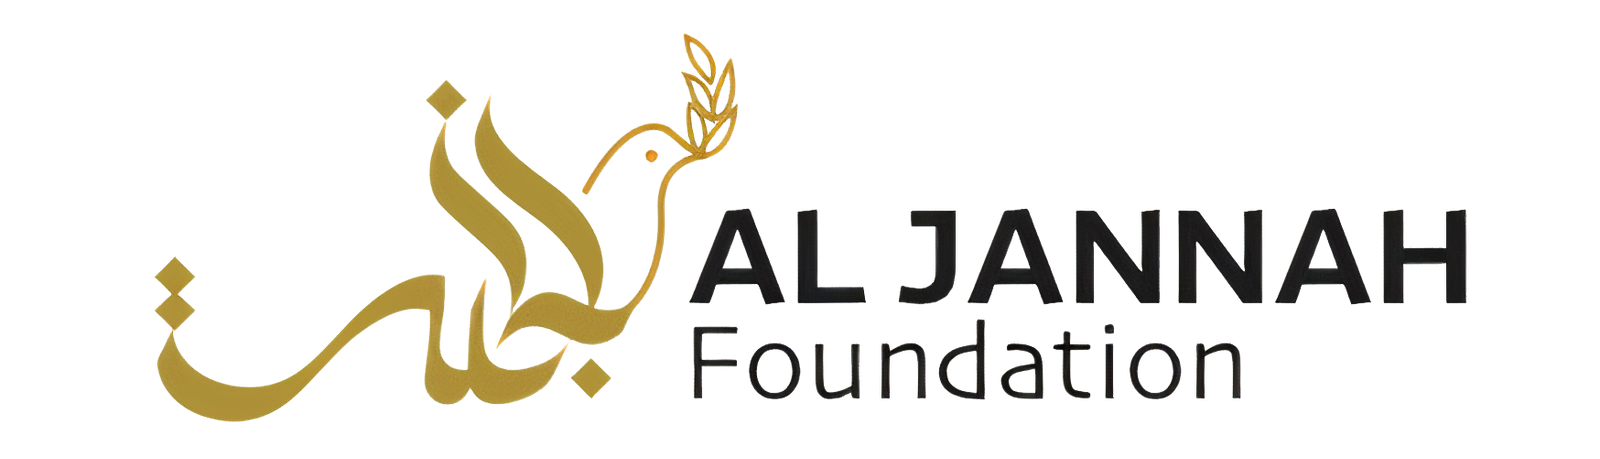 Jannah Foundation